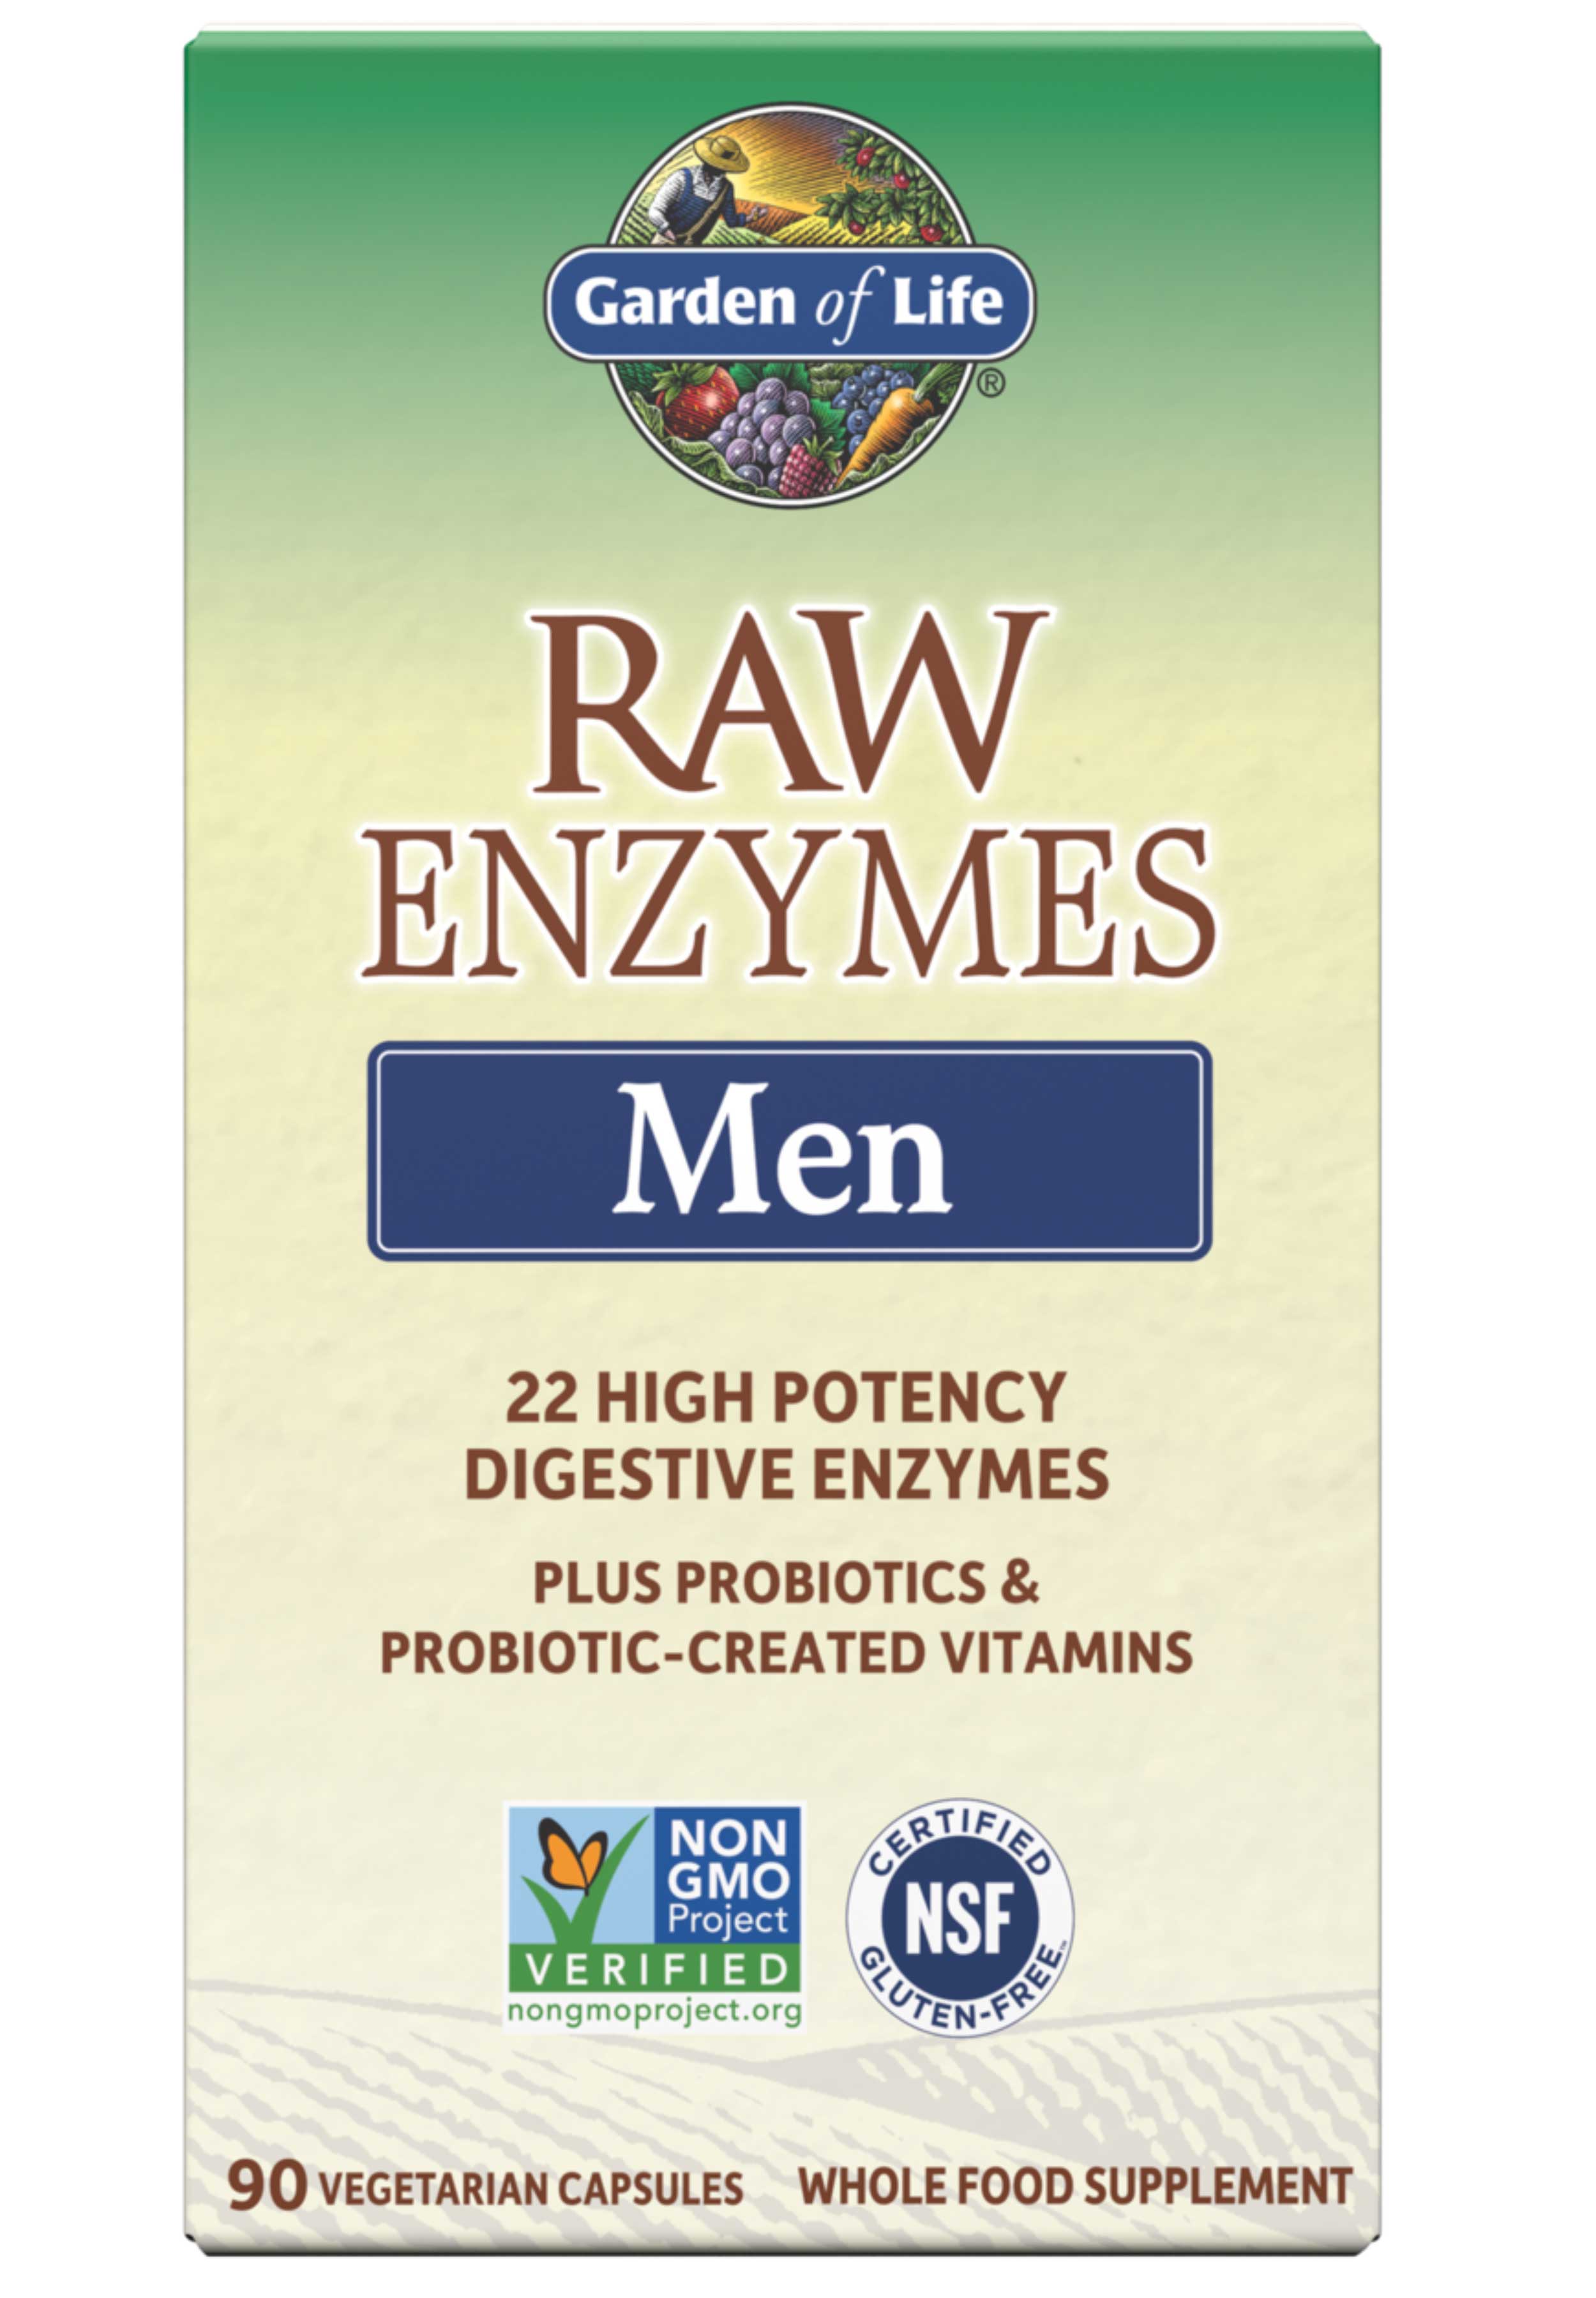 Garden of Life RAW Enzymes Men